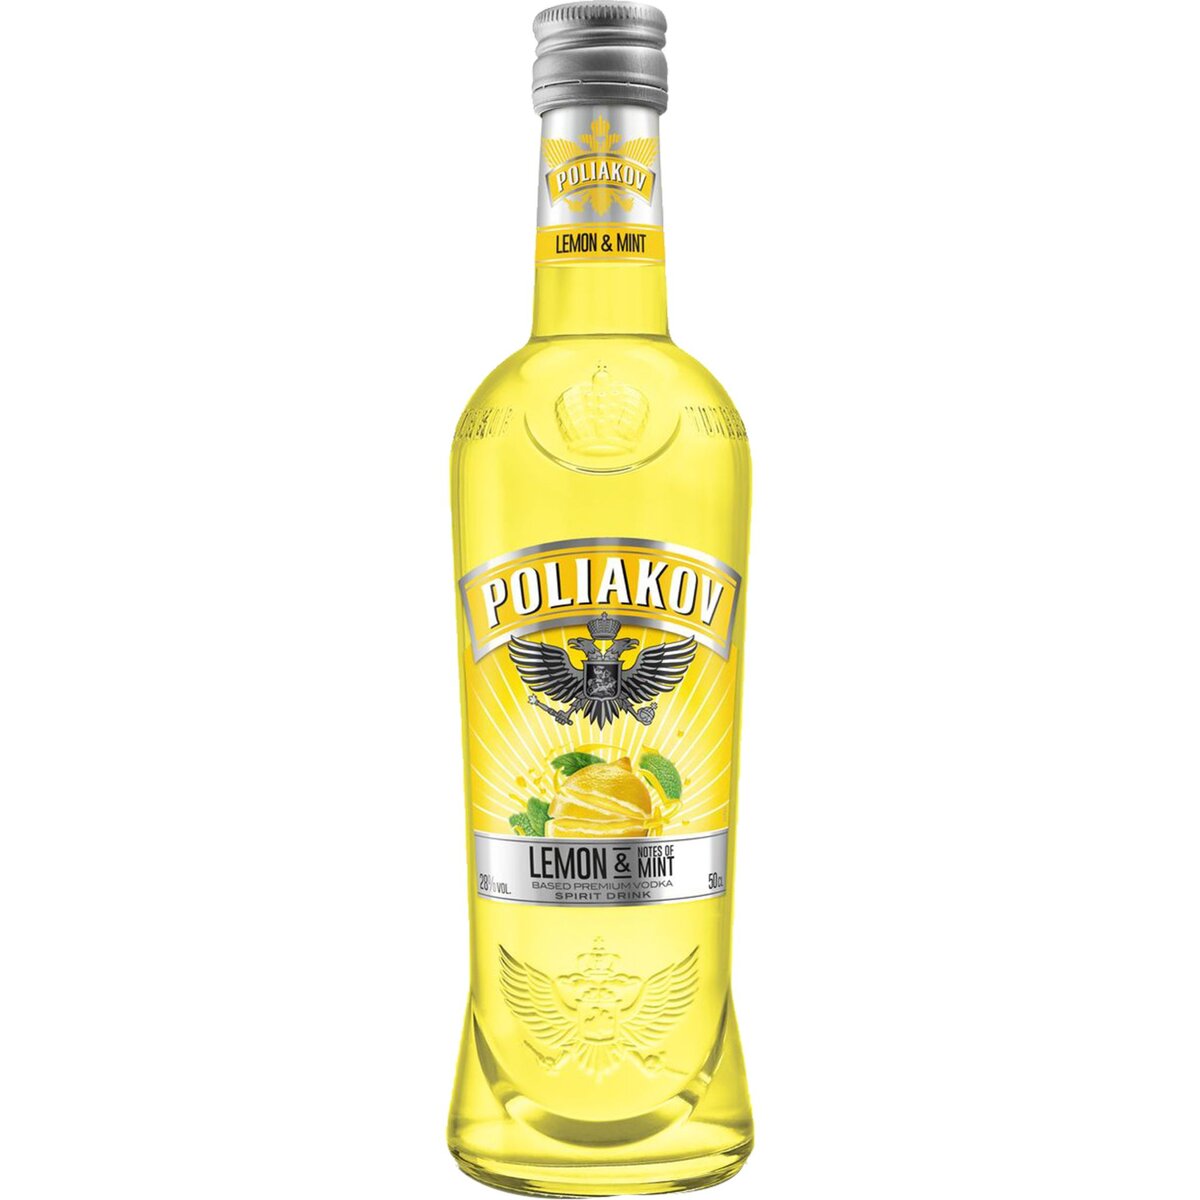 POLIAKOV Shooter vodka citron menthe 28% 50cl pas cher 